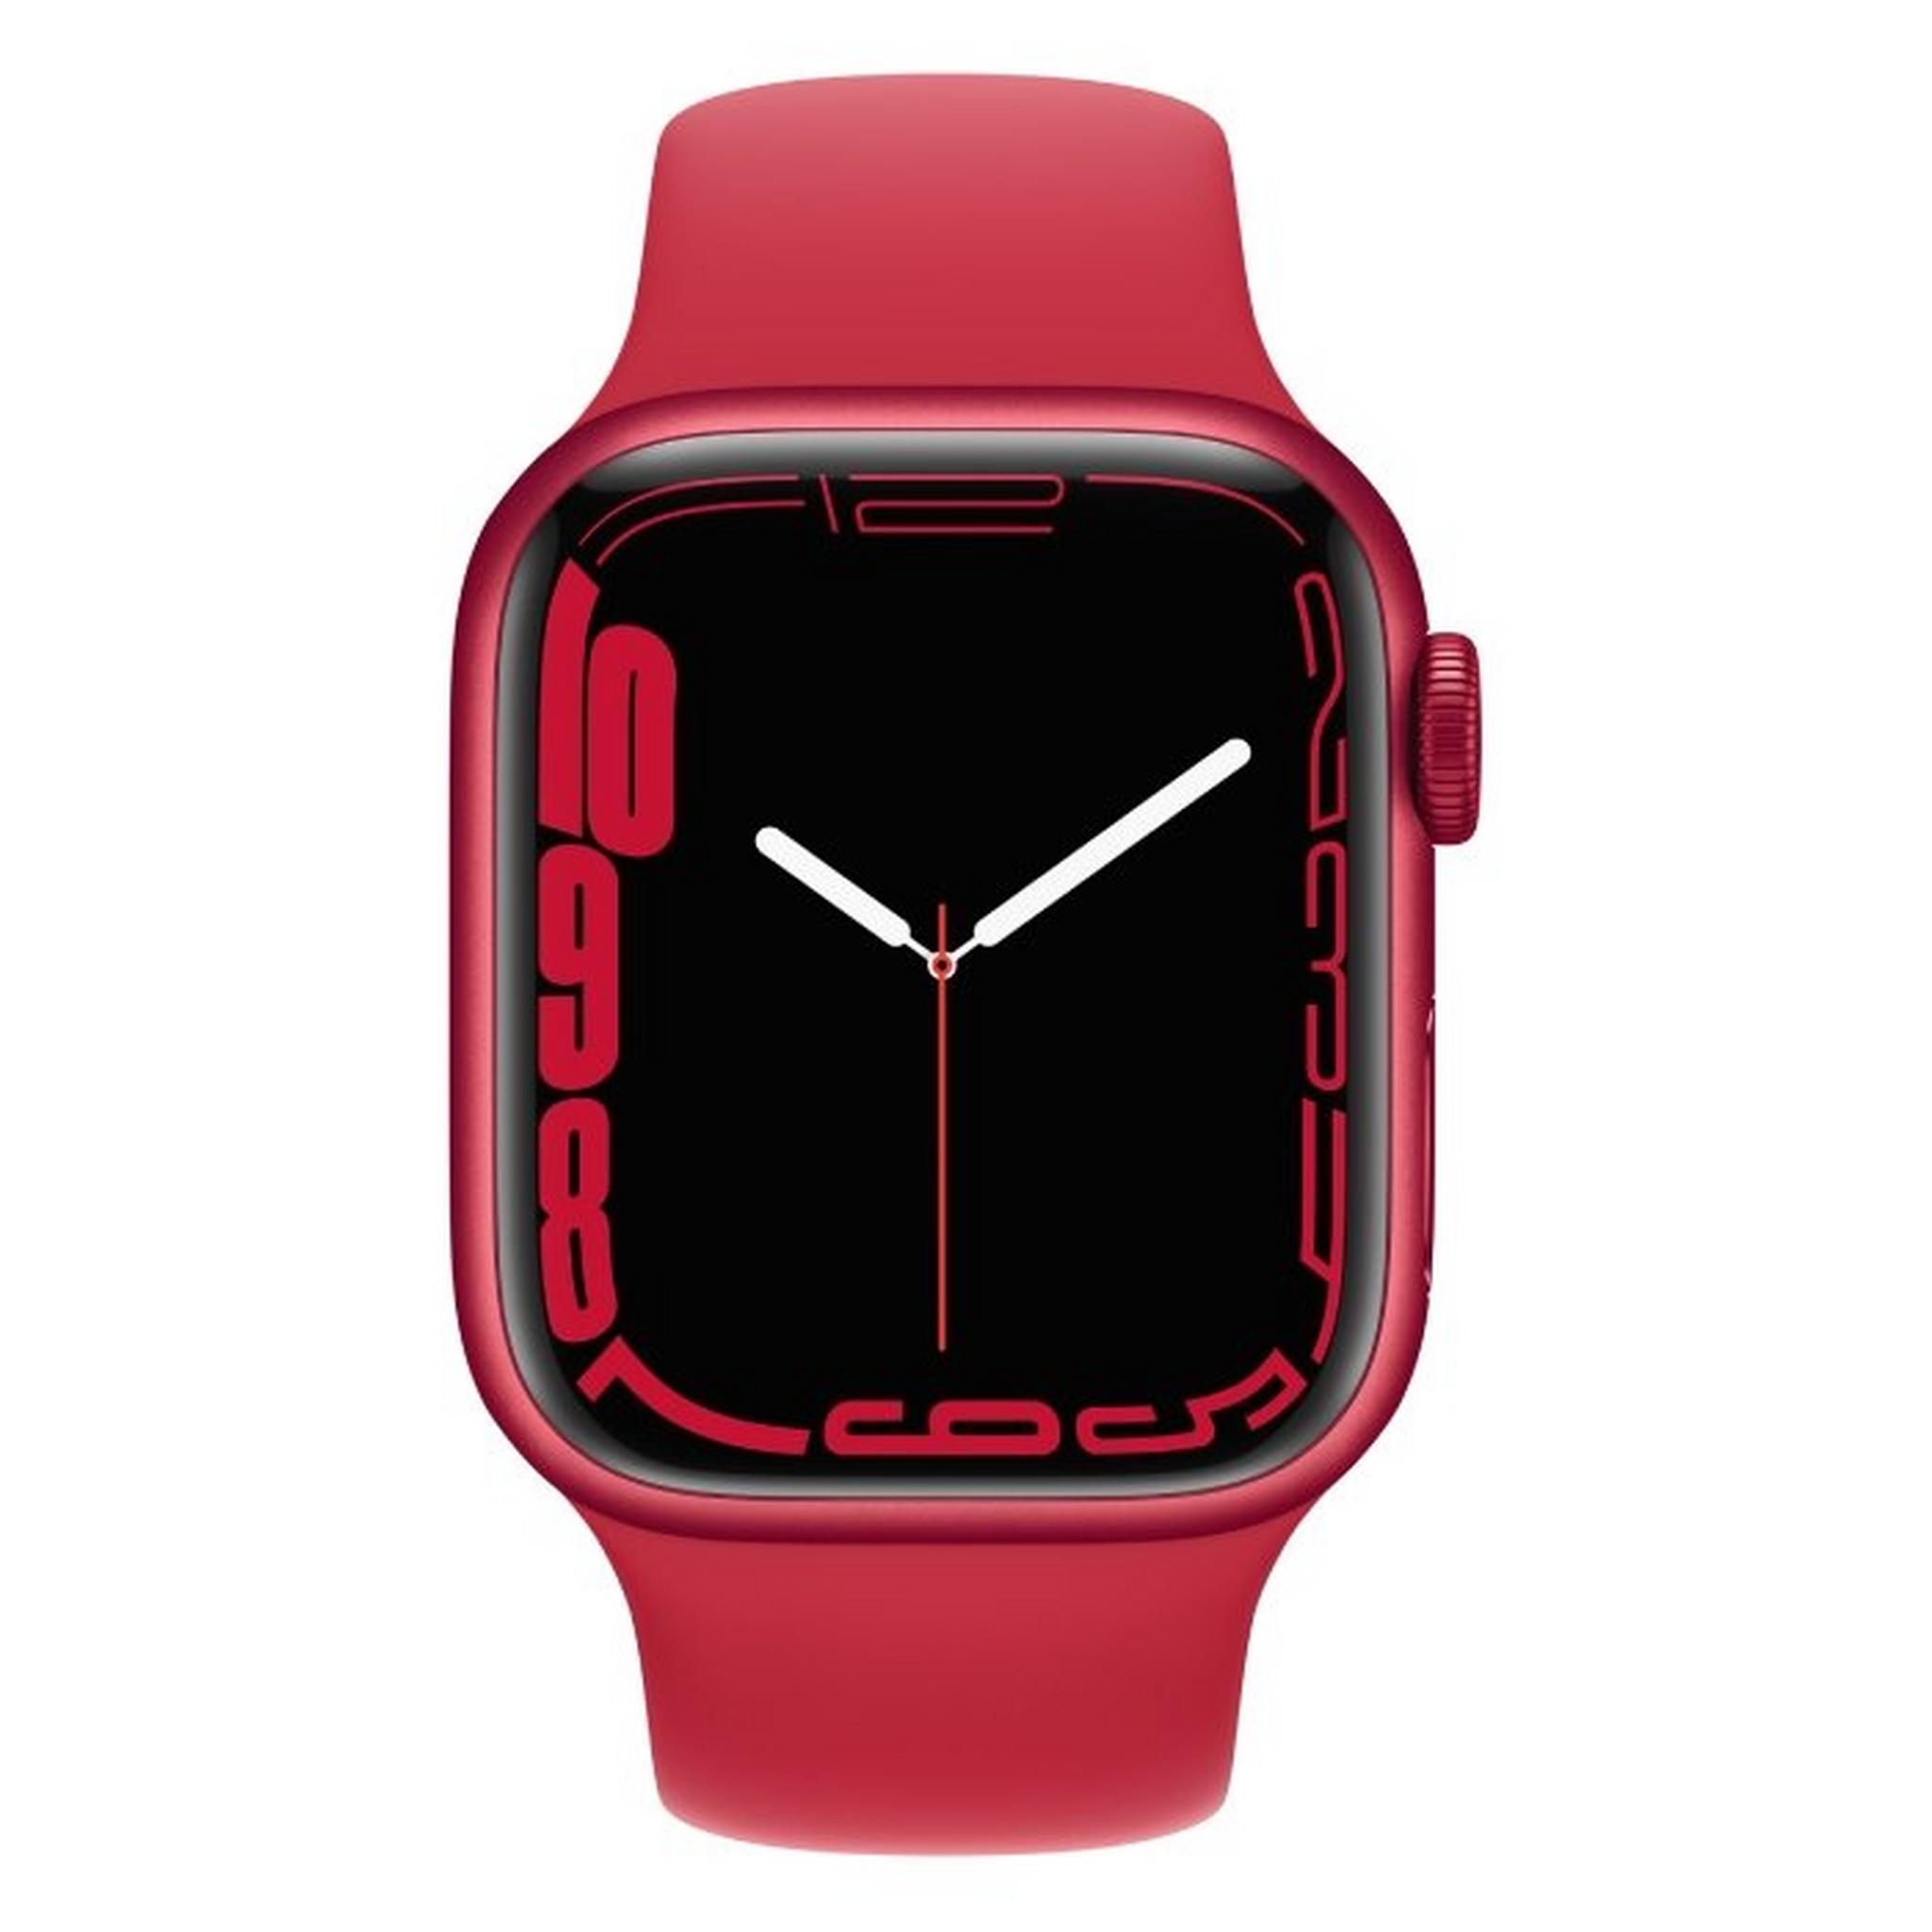 Apple Watch Series 7 GPS 41mm - Red